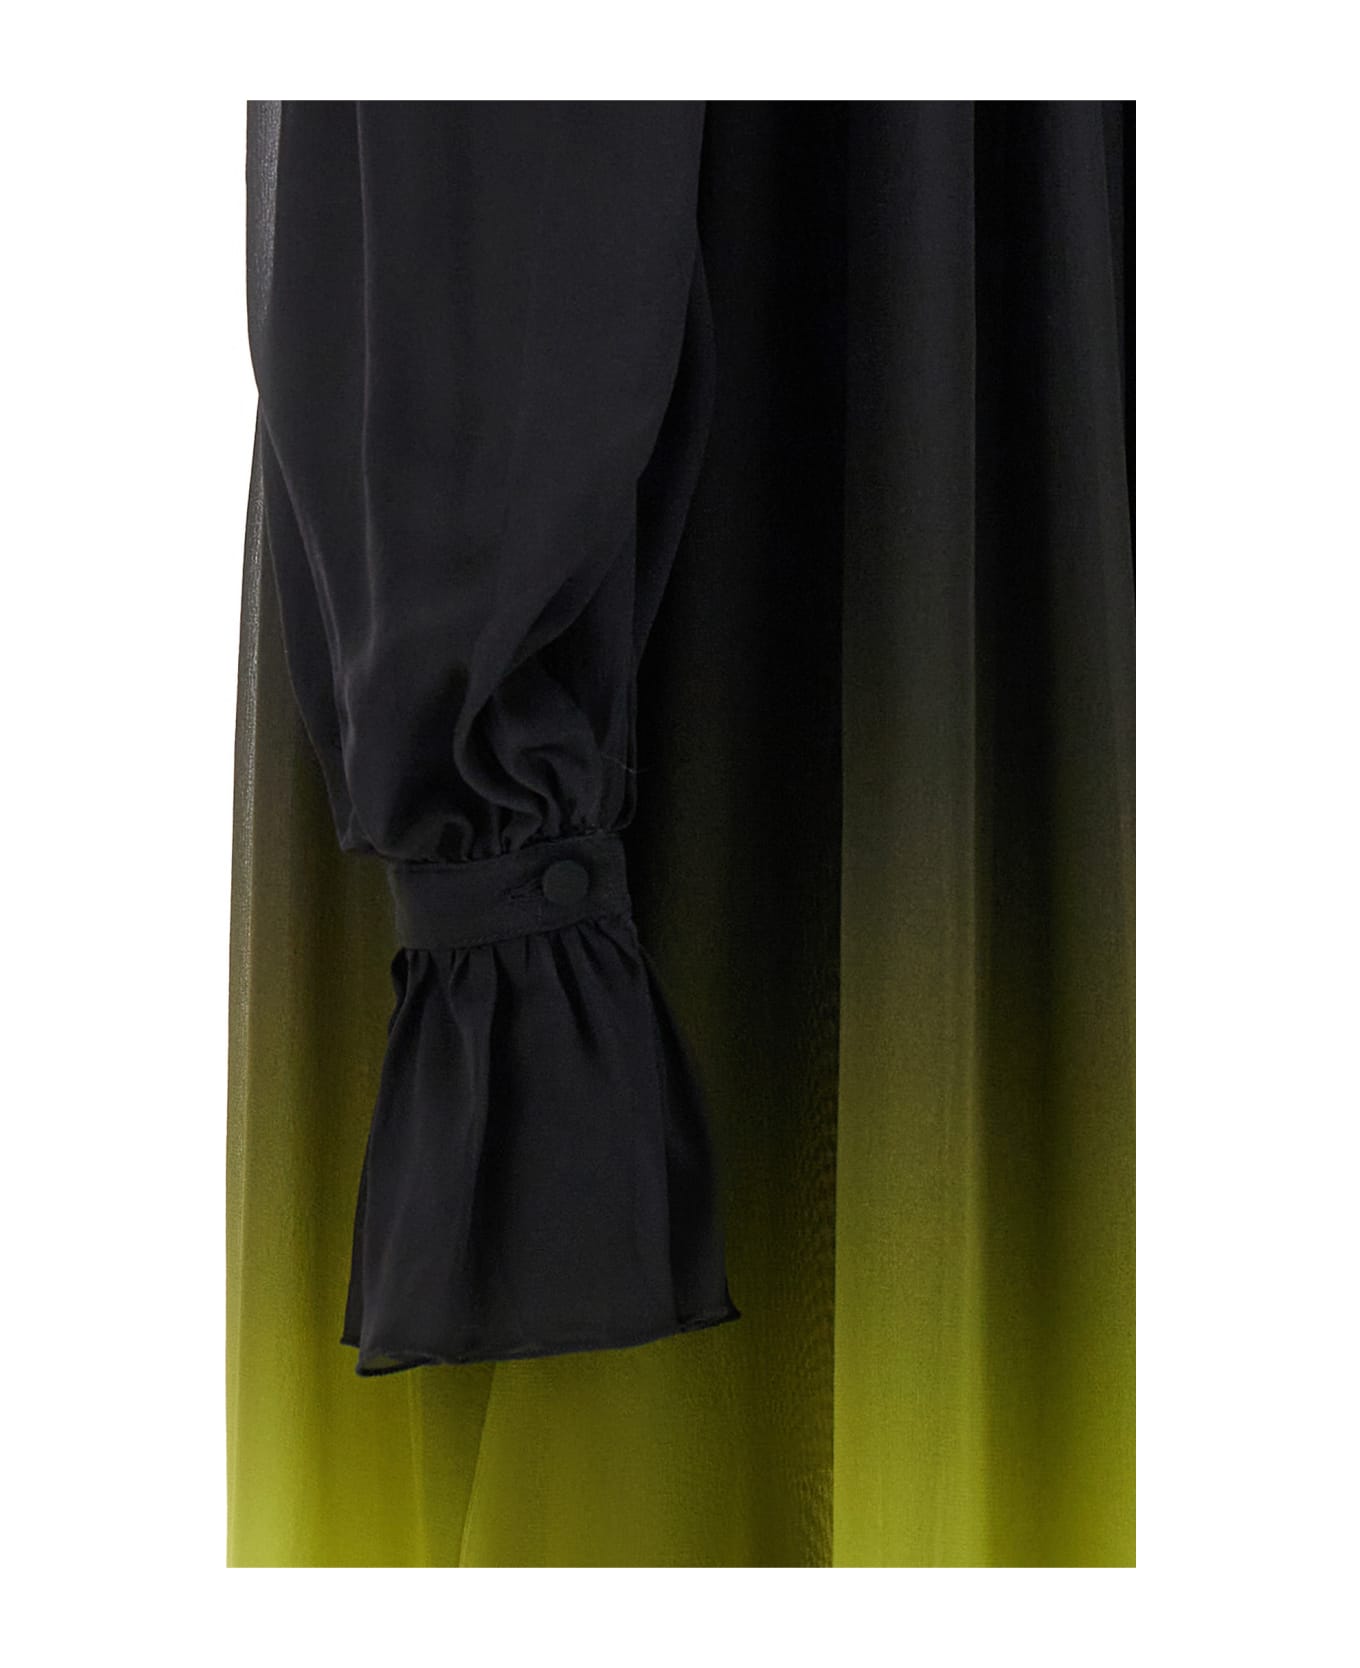 Etro 'paisley' Long Dress - Multicolor